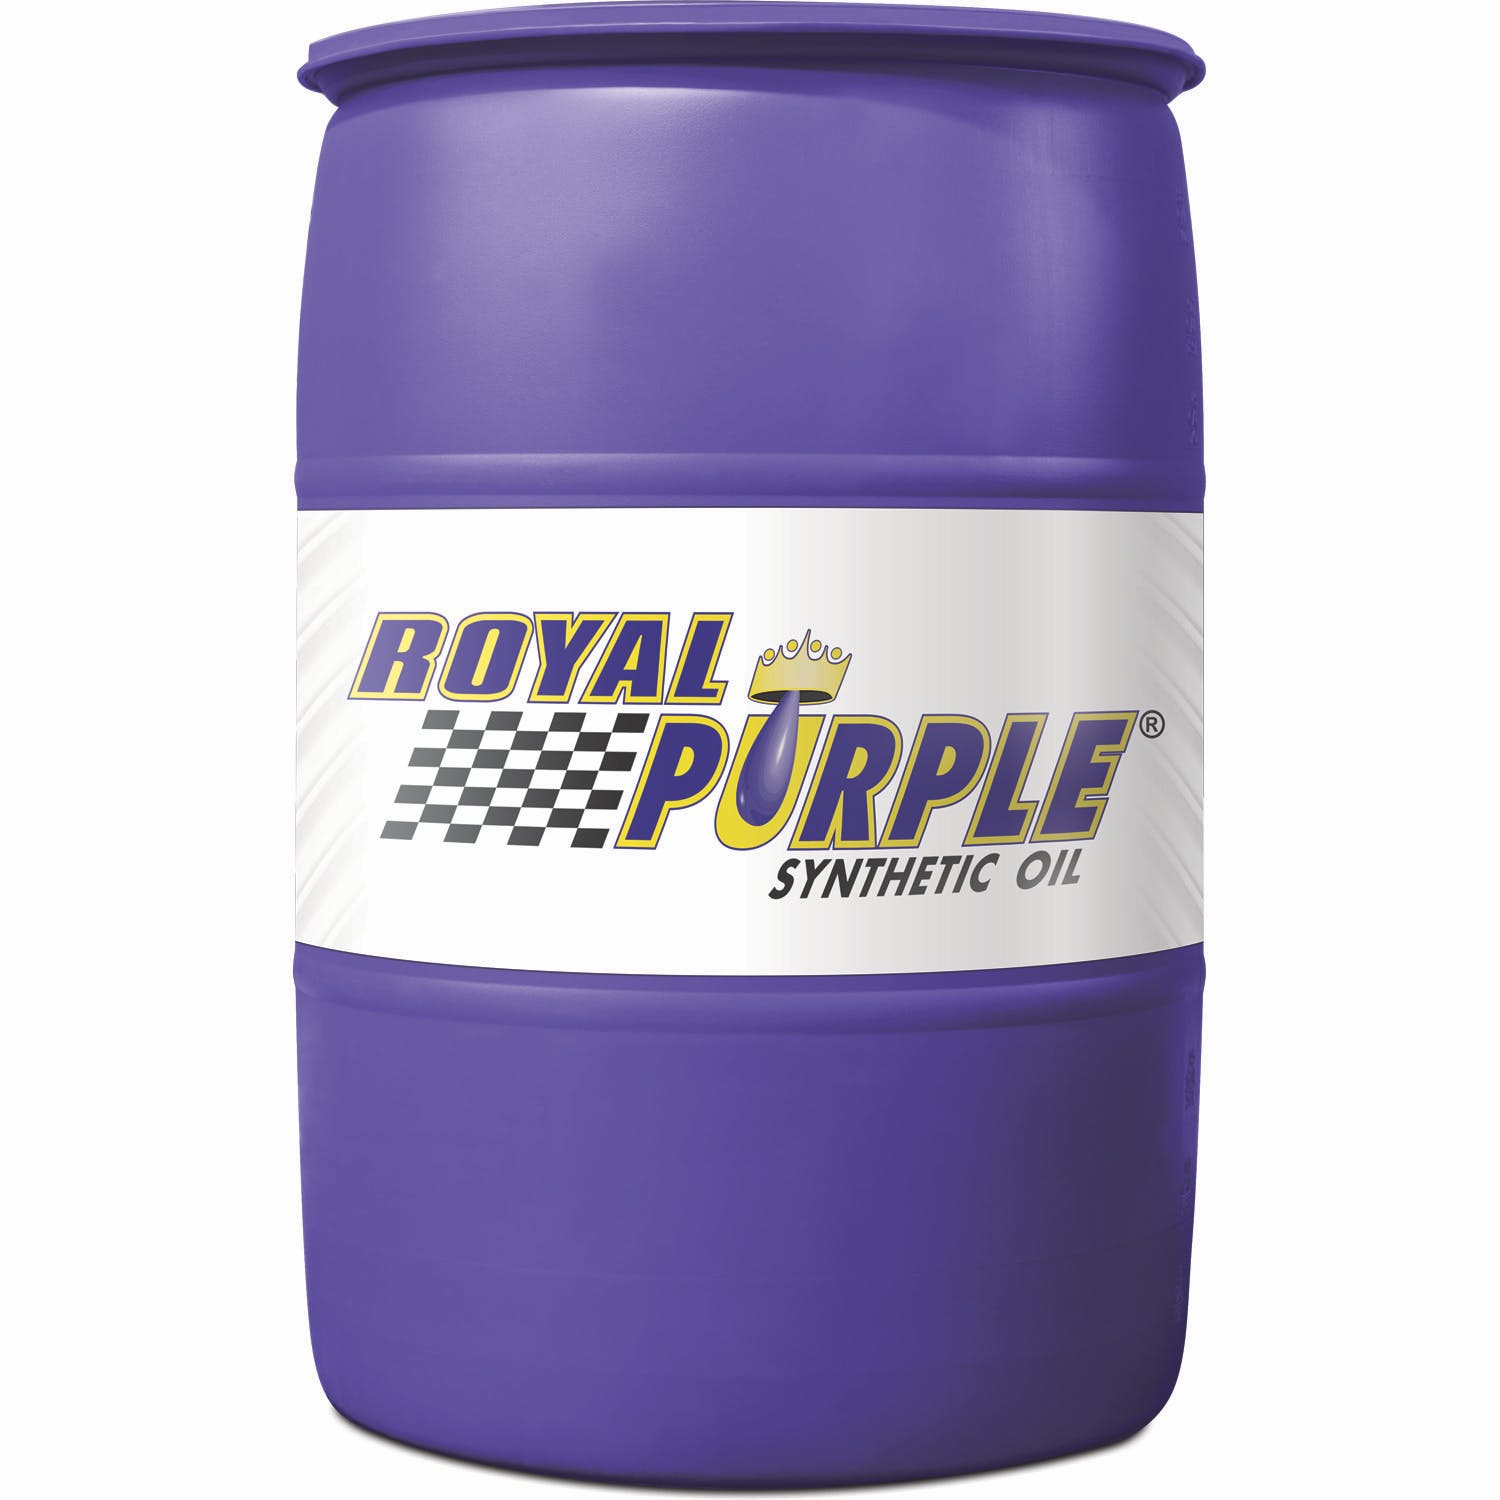 Royal Purple 55520 5W-20 Passenger Car Engine Oil 55 gal Drum